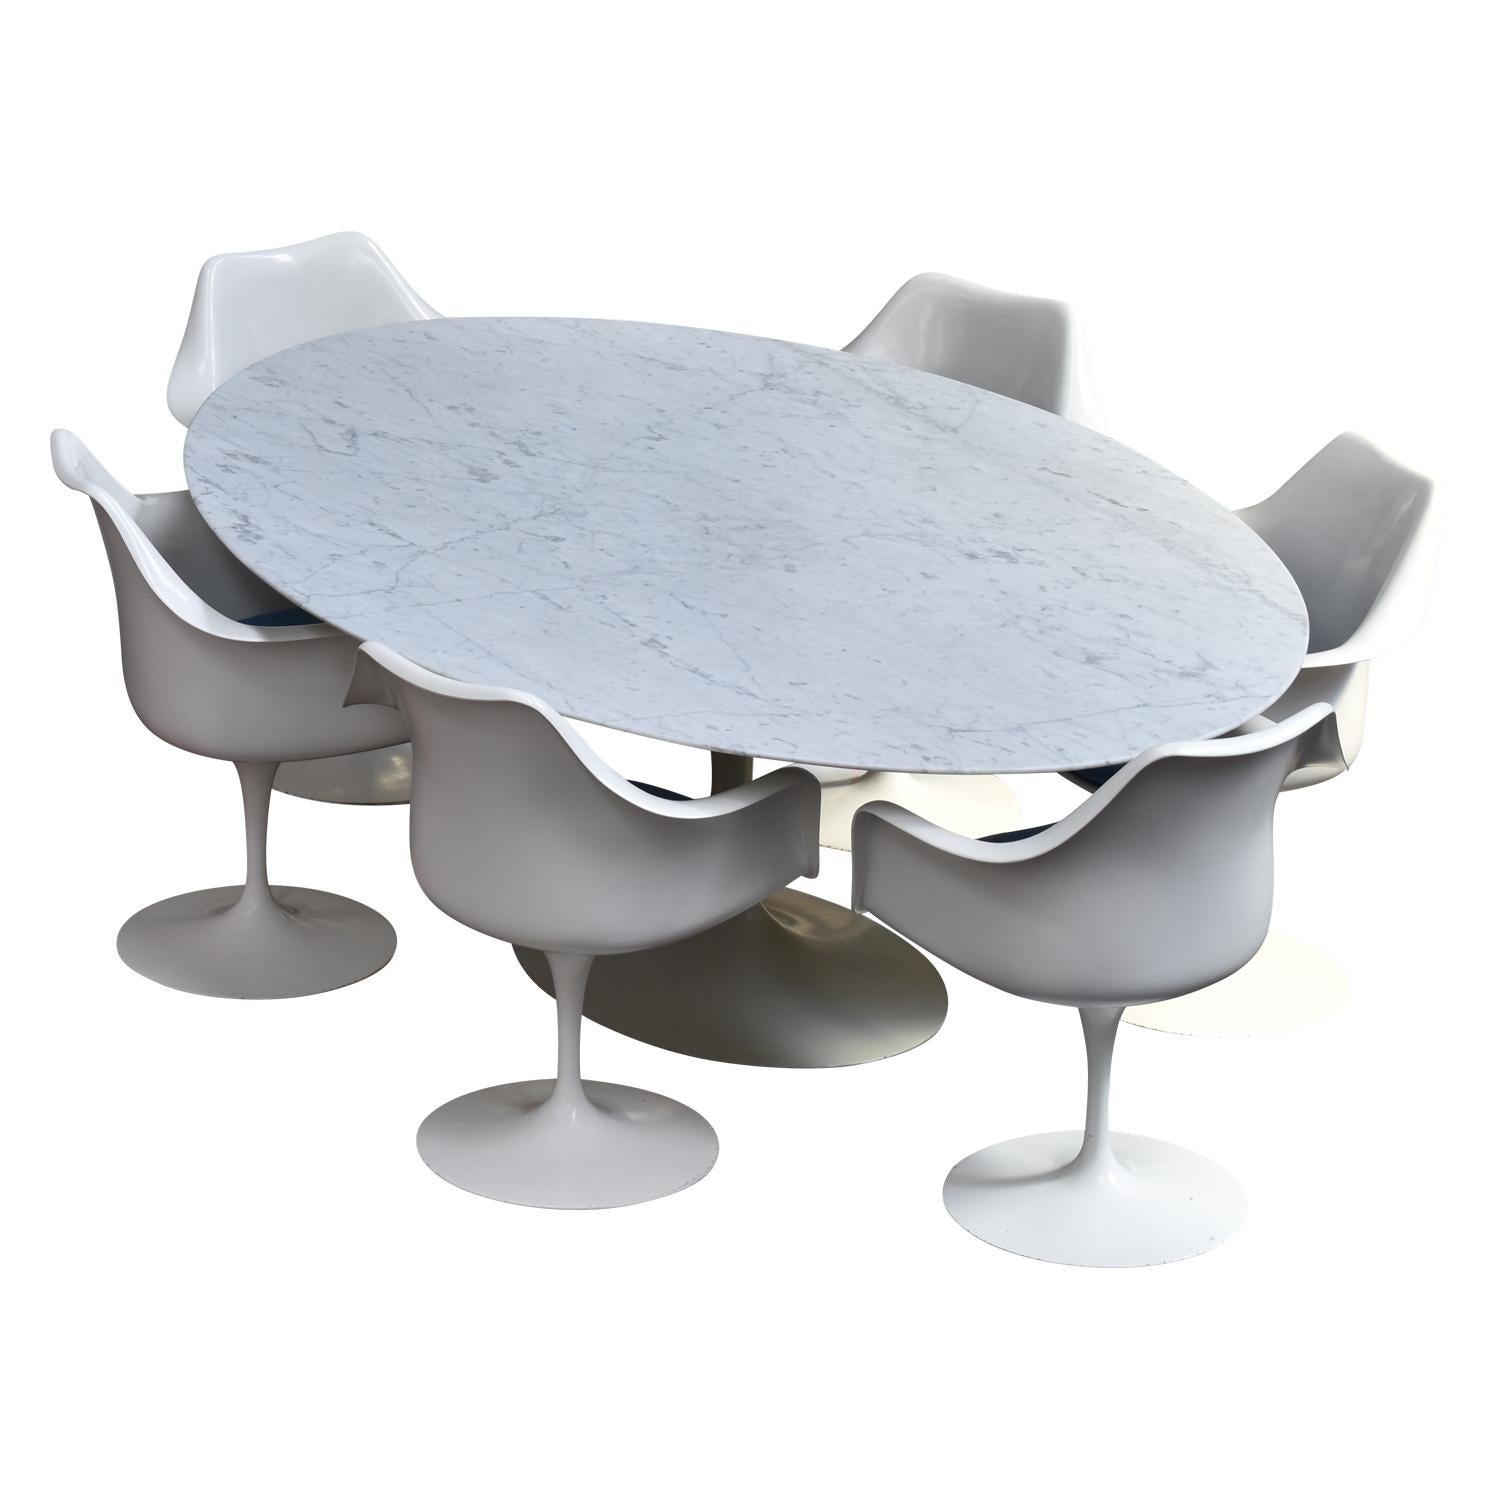 Oval Carrara Marble Dining Table by Eero Saarinen for Knoll 1